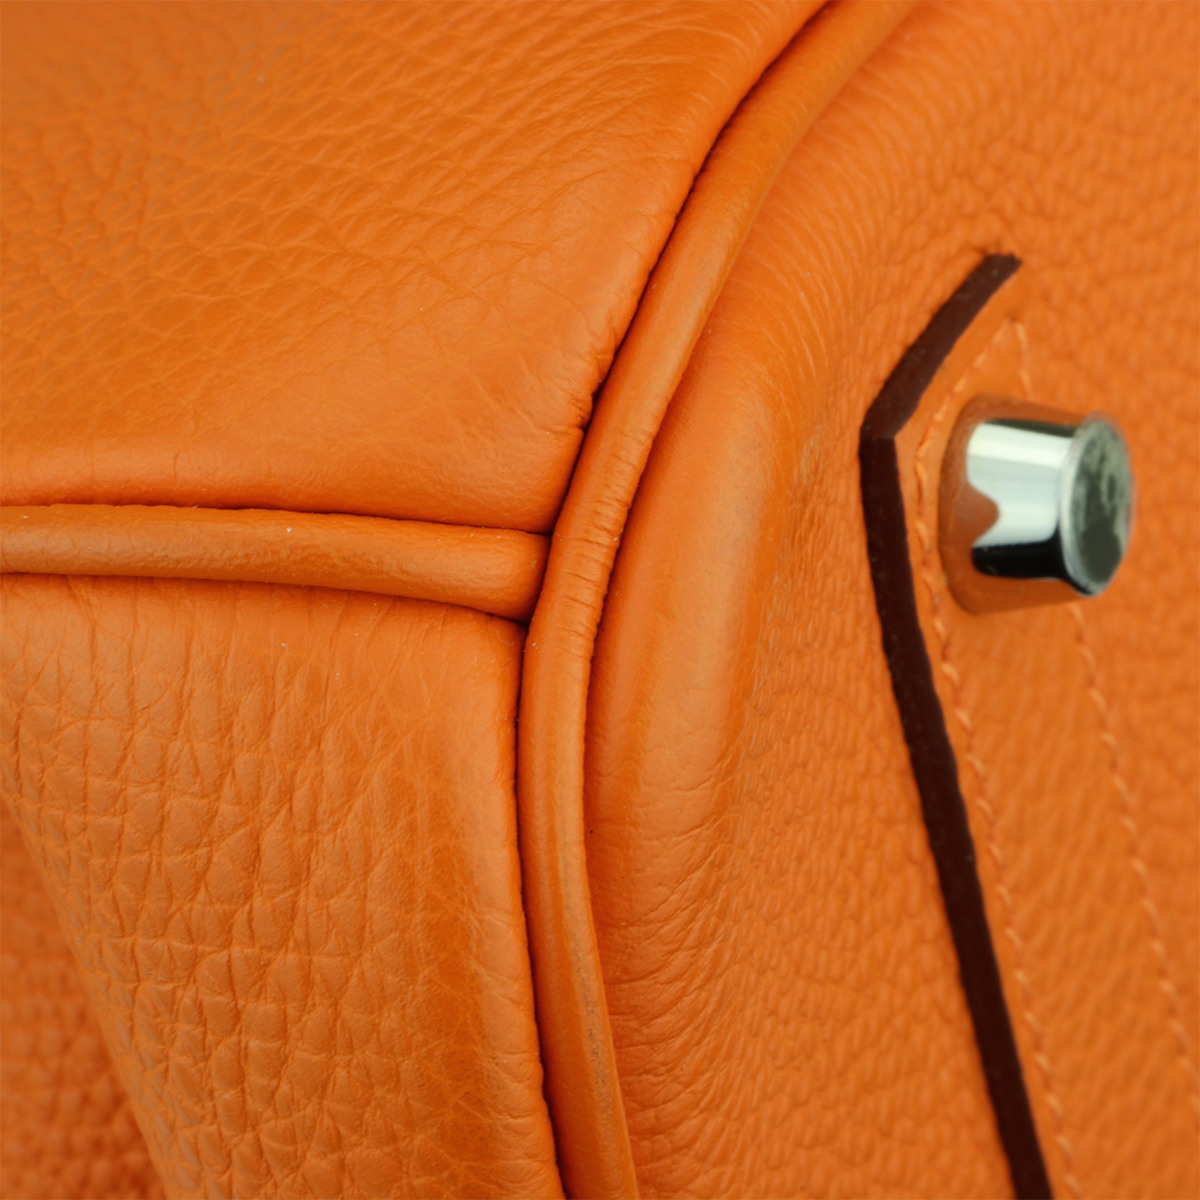 Hermès Birkin 35cm Orange Togo Leather with Palladium Hardware Stamp N 2010  - BoutiQi Bags